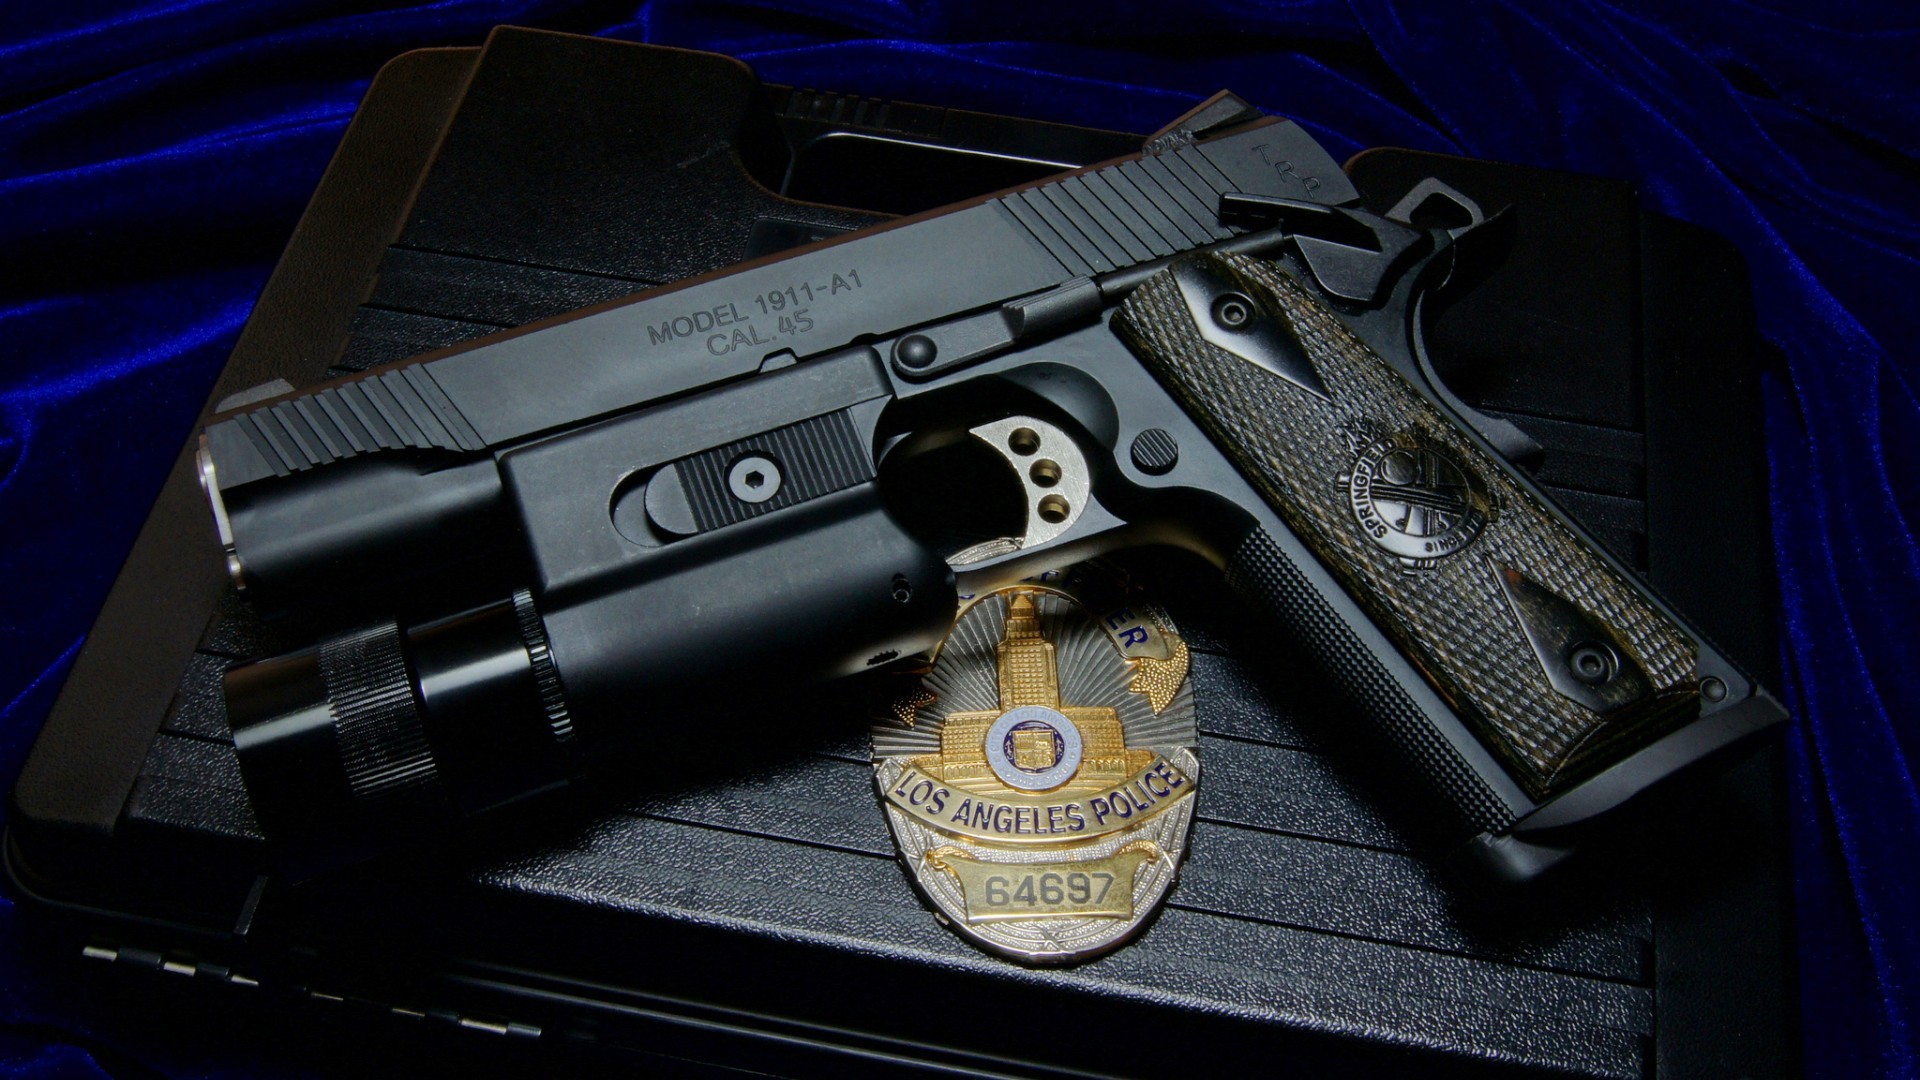 General 1920x1080 CAL. 45 M1911 gun Springfield Armory Springfield 1911 weapon .45 ACP 1911 badge police pistol American firearms